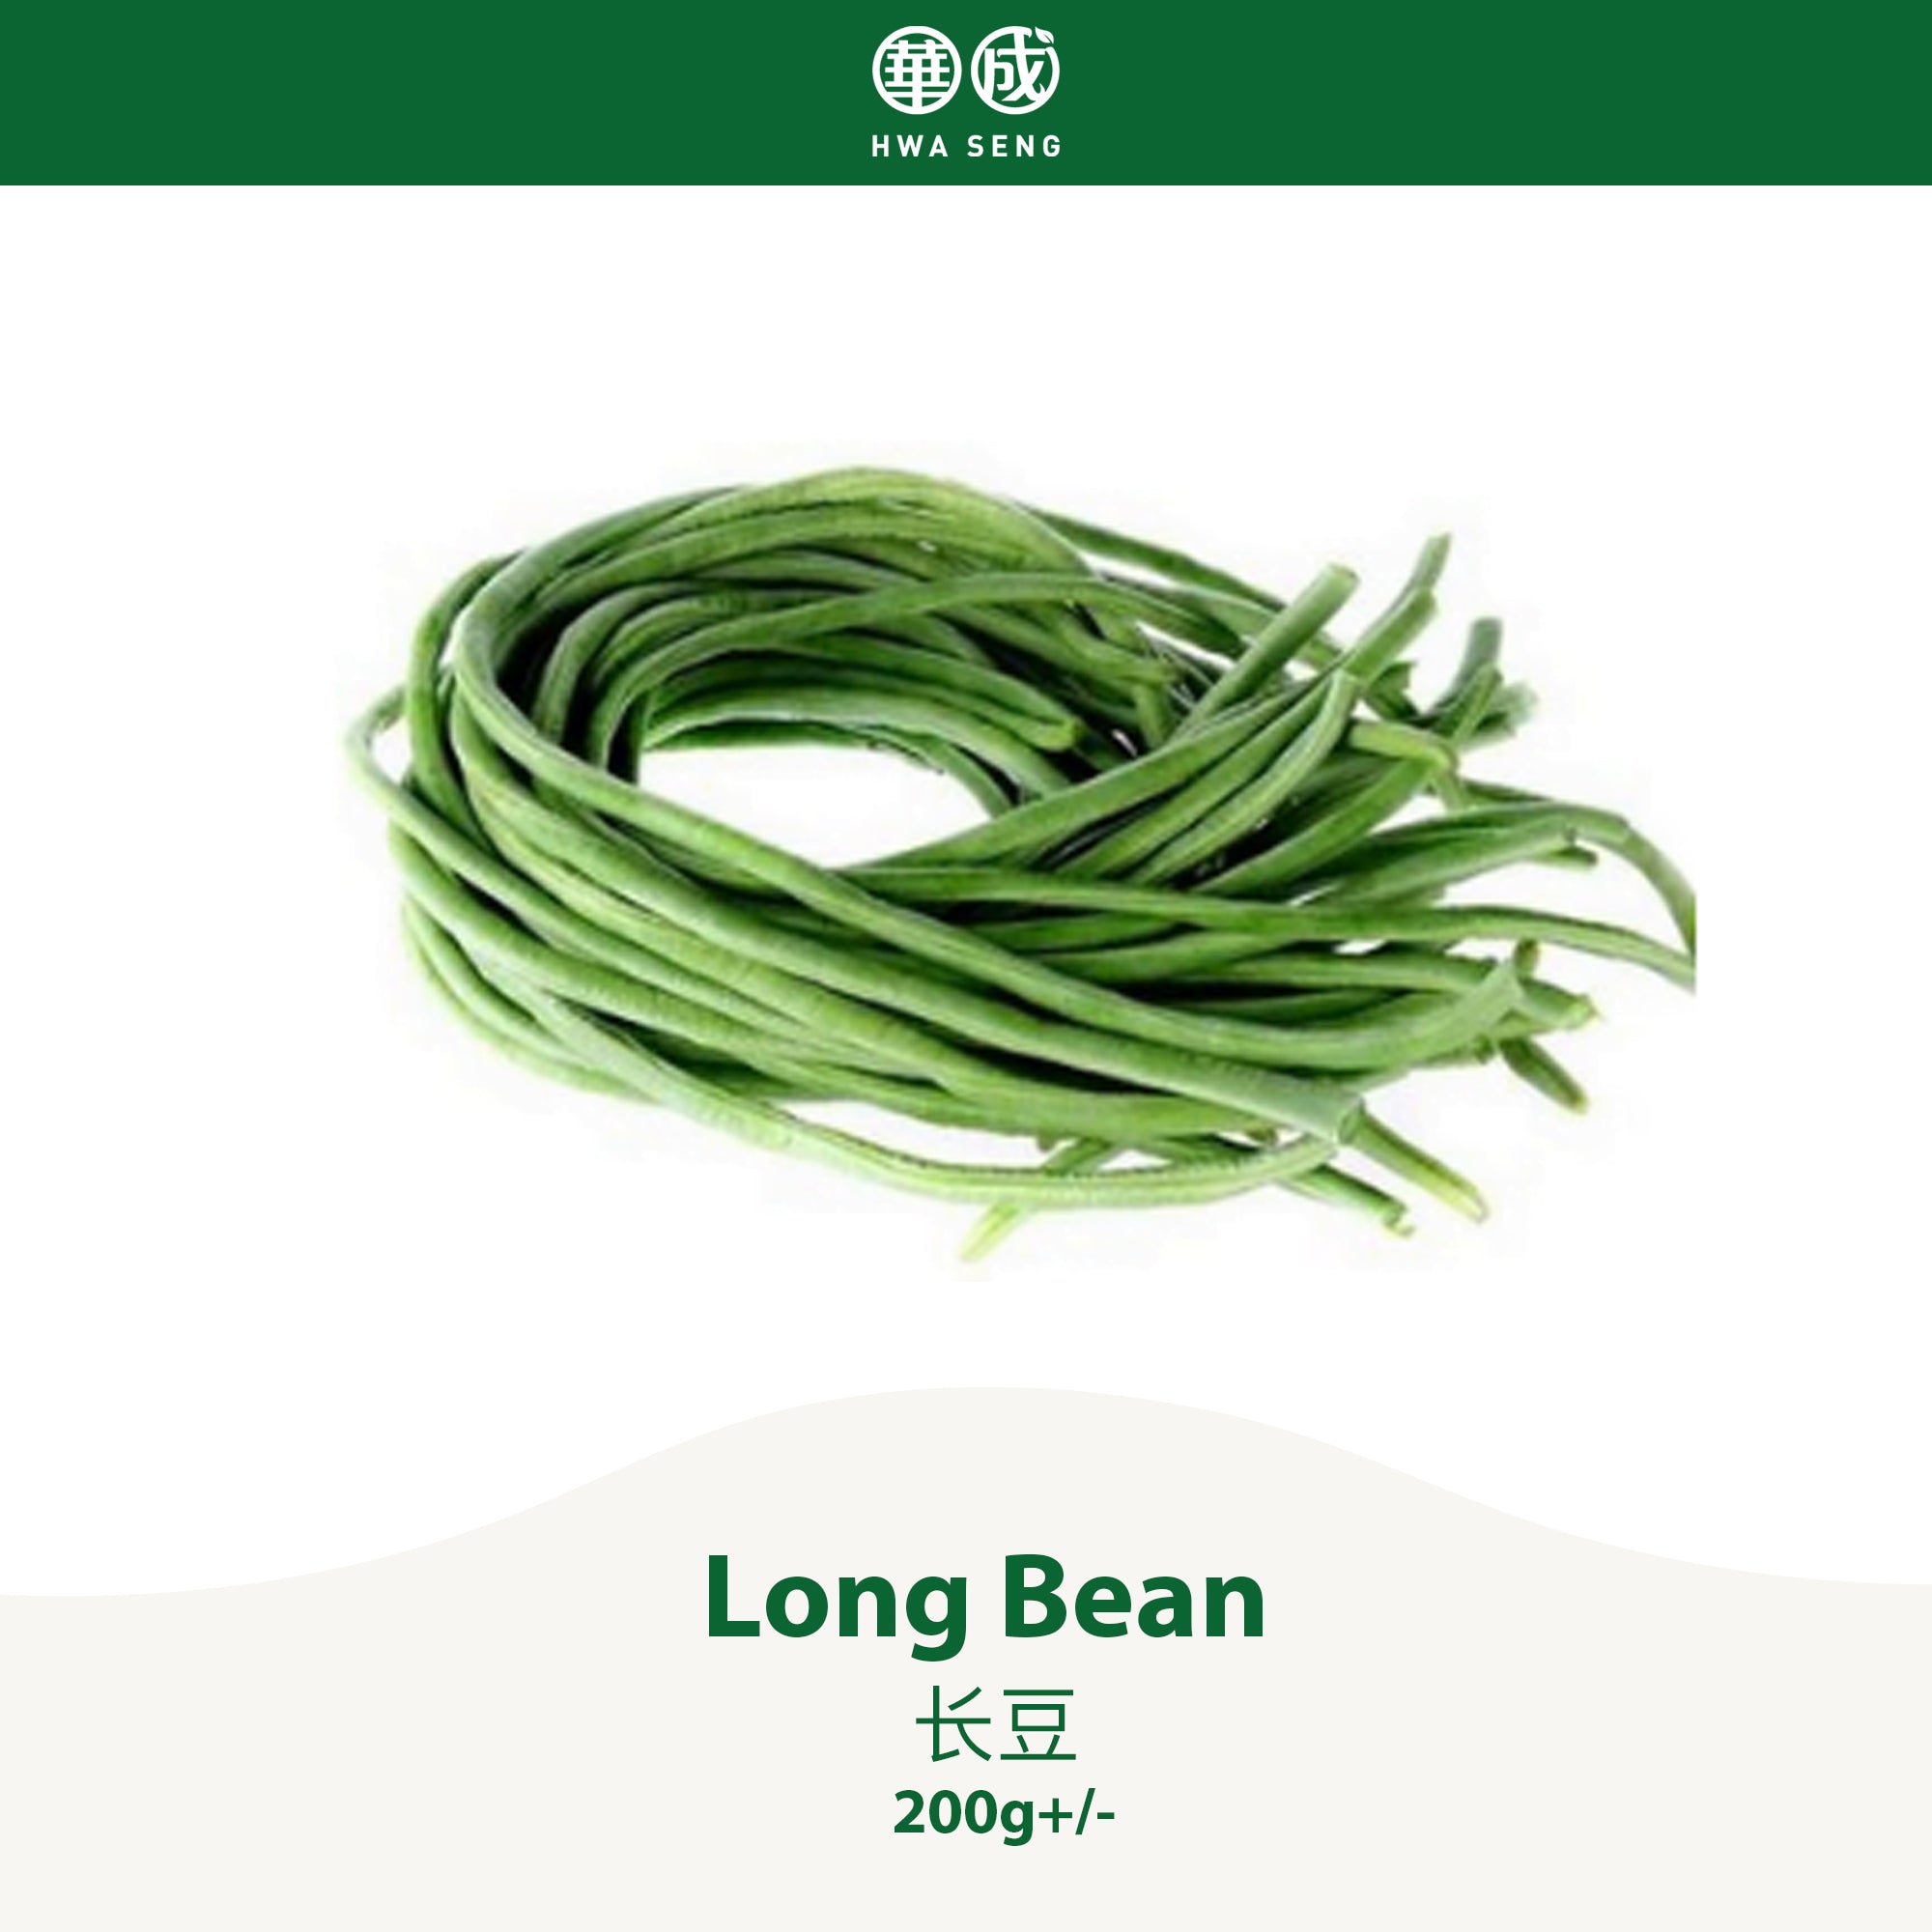 Long Bean 长豆 200g+/-